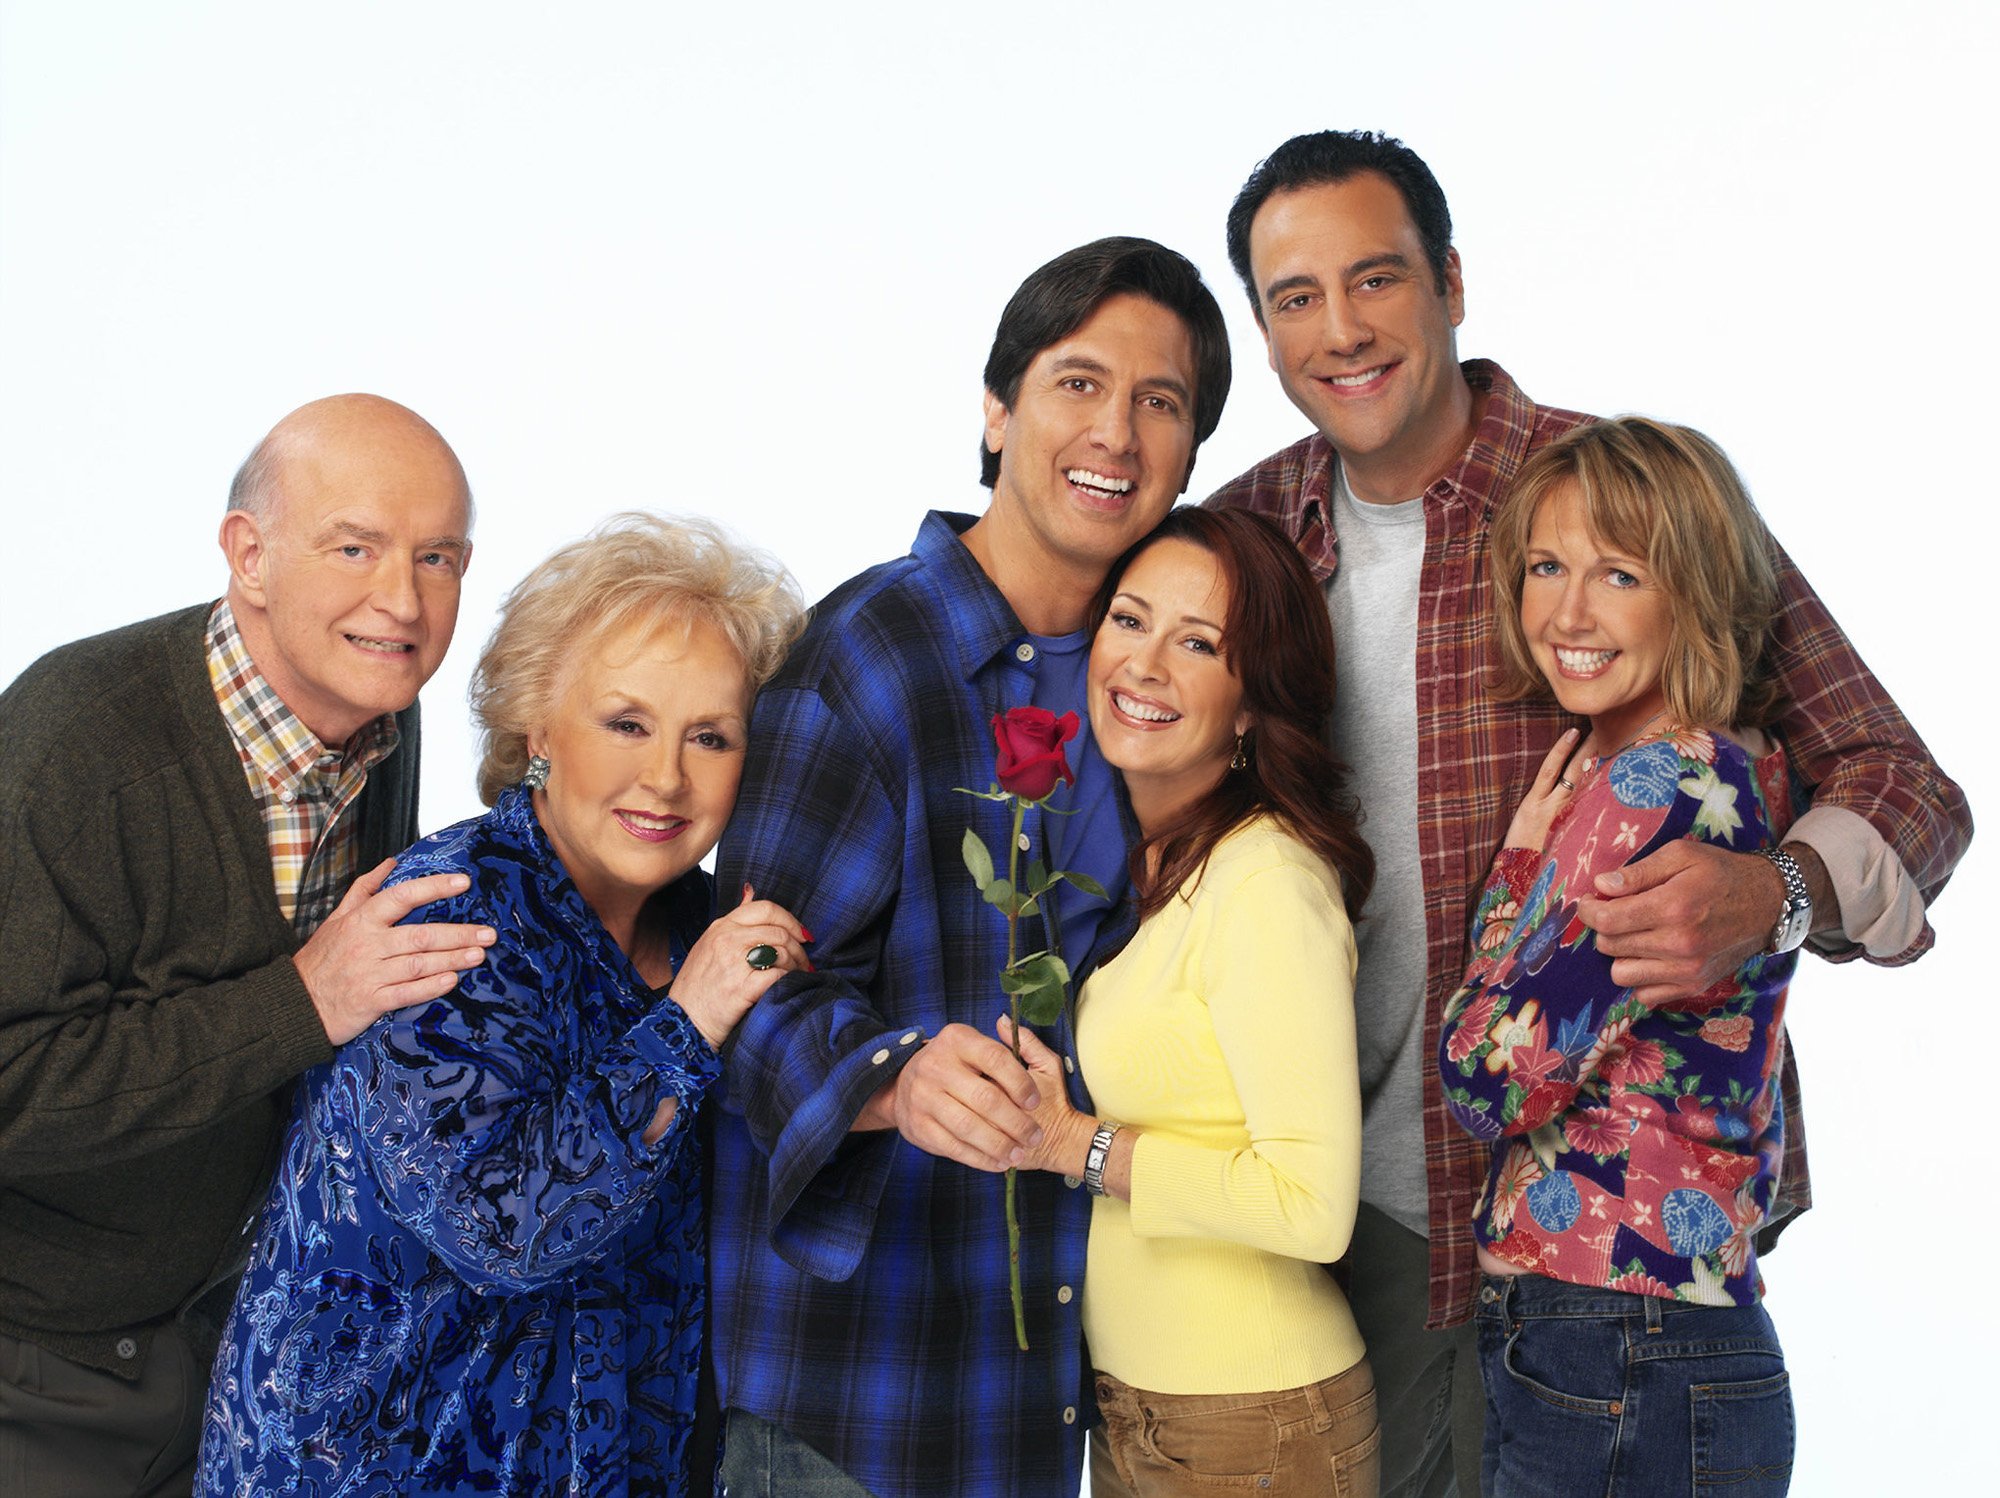 The 'Everybody Loves Raymond' cast